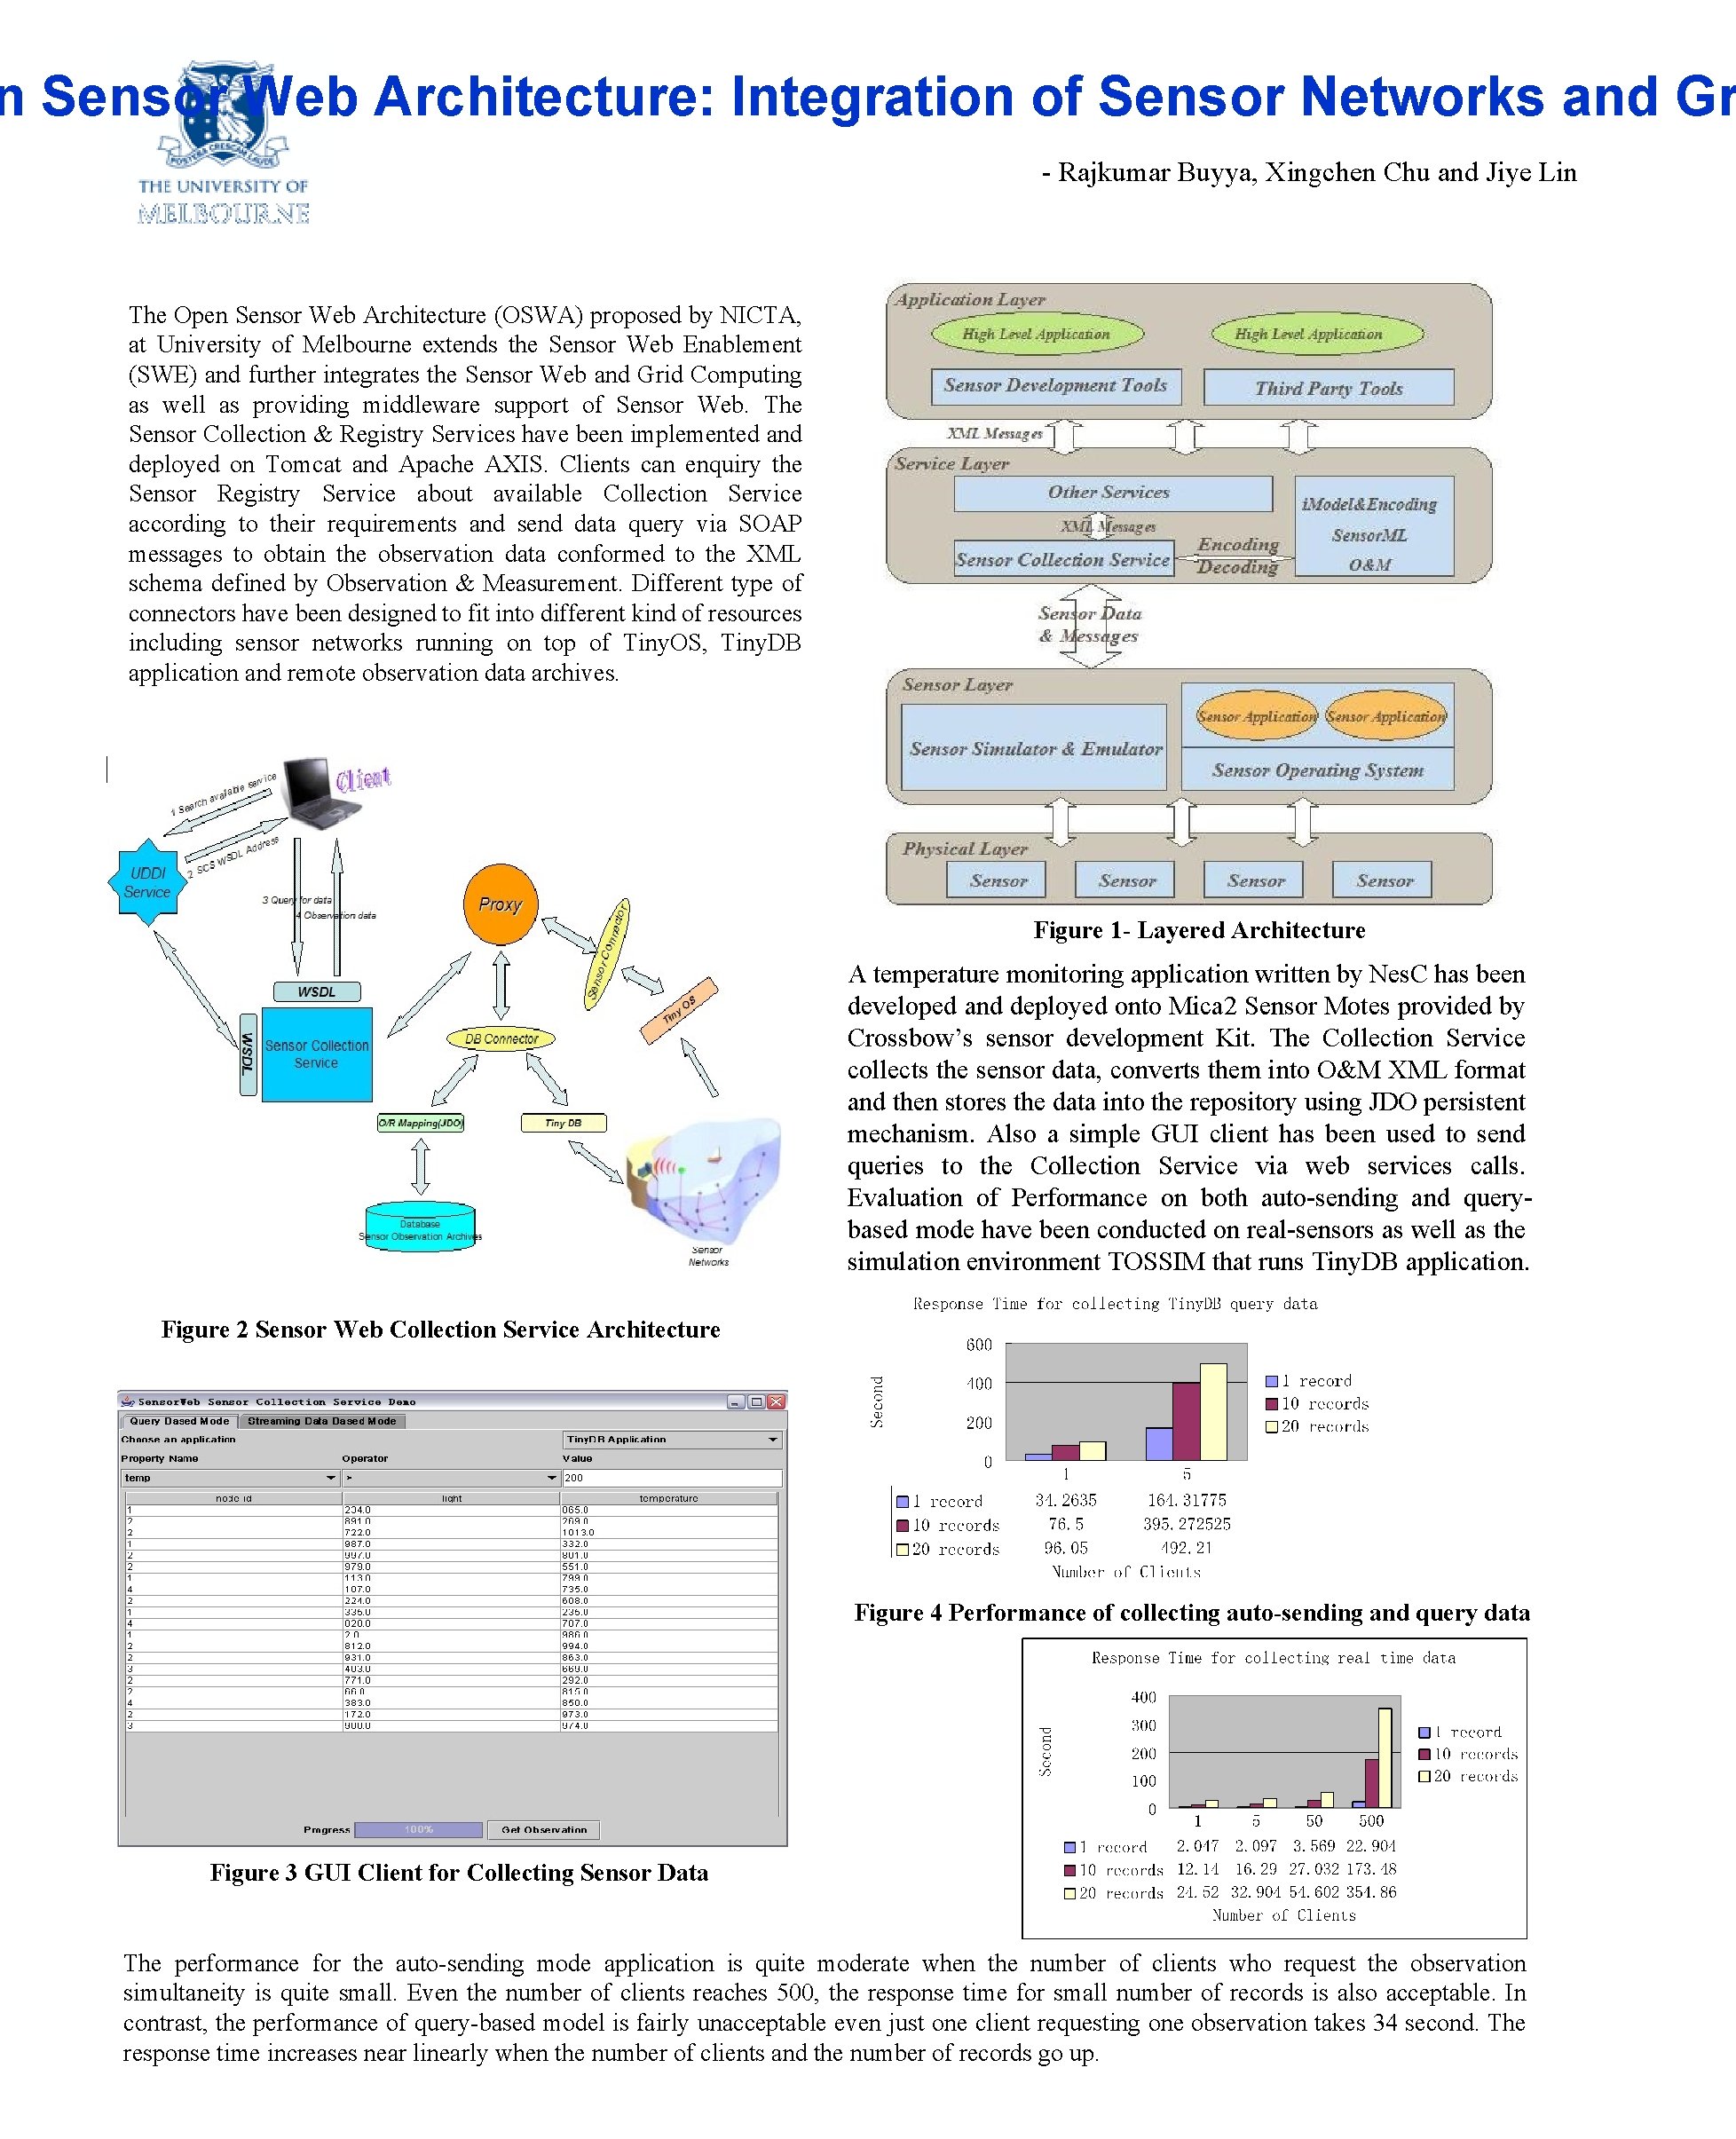 n Sensor Web Architecture: Integration of Sensor Networks and Gr - Rajkumar Buyya, Xingchen